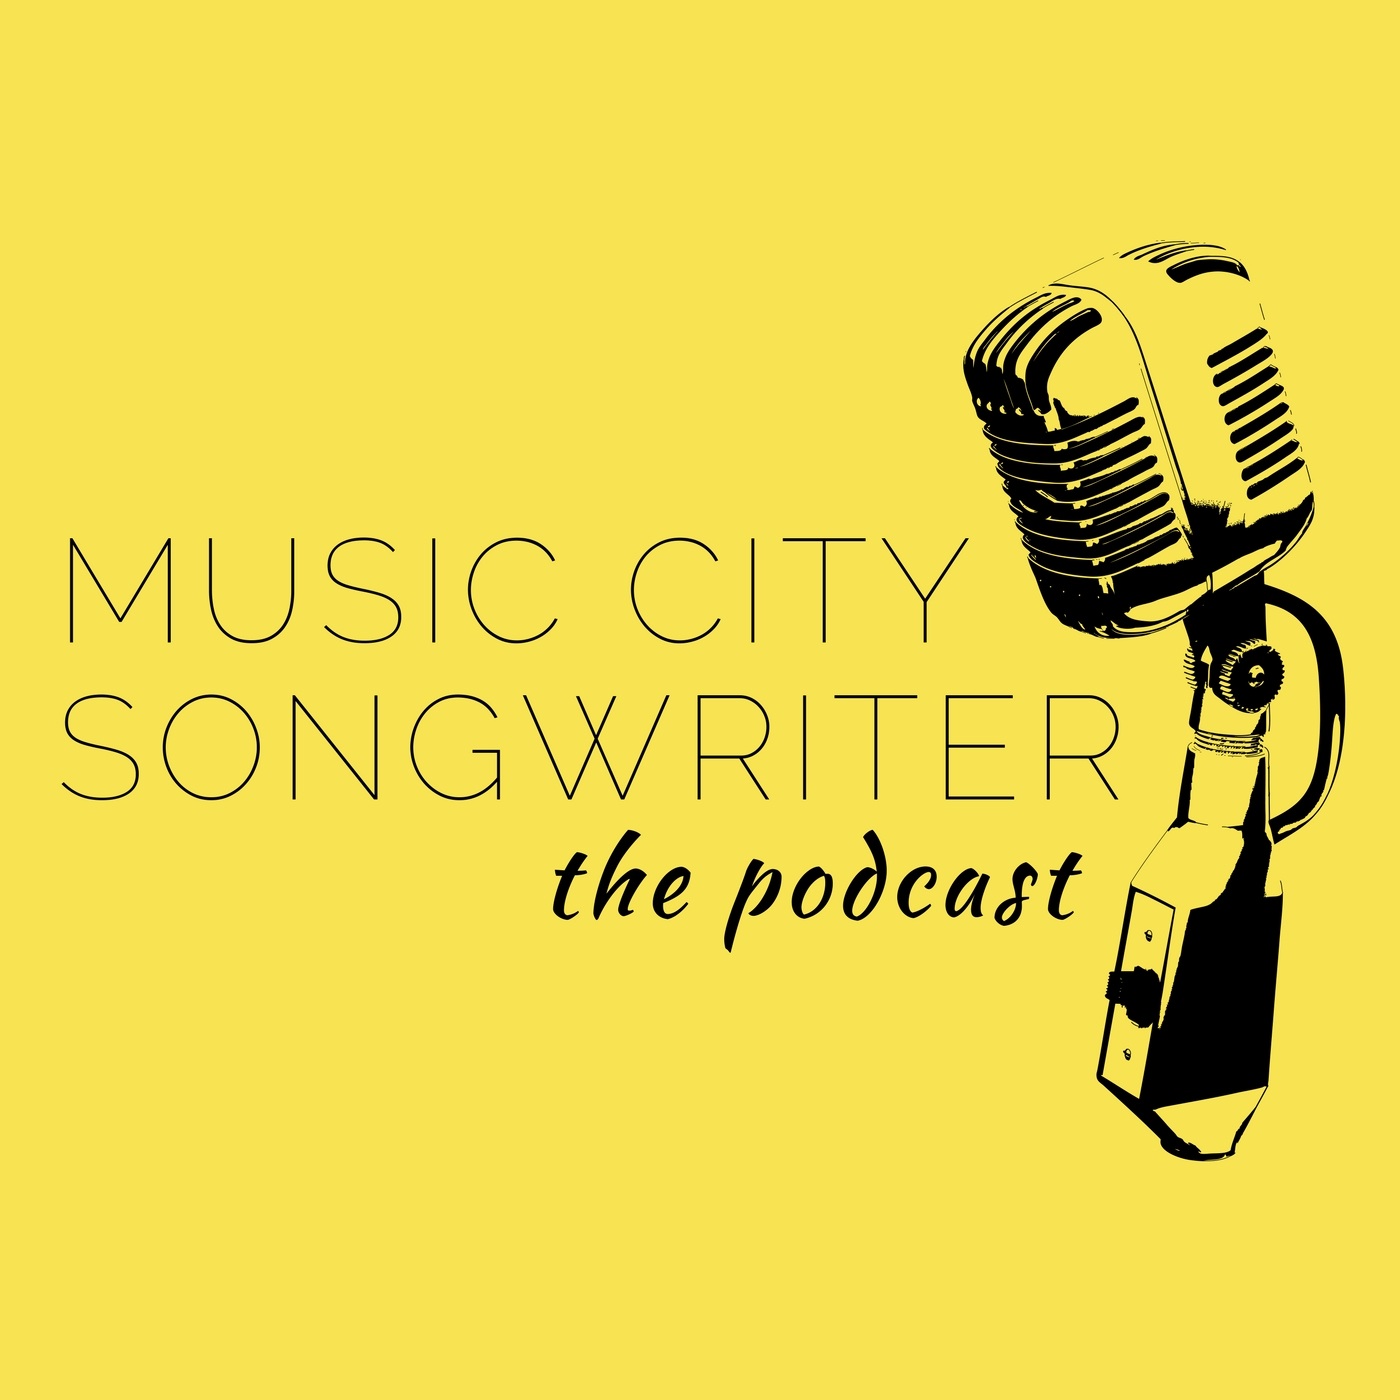 Music City Songwriter